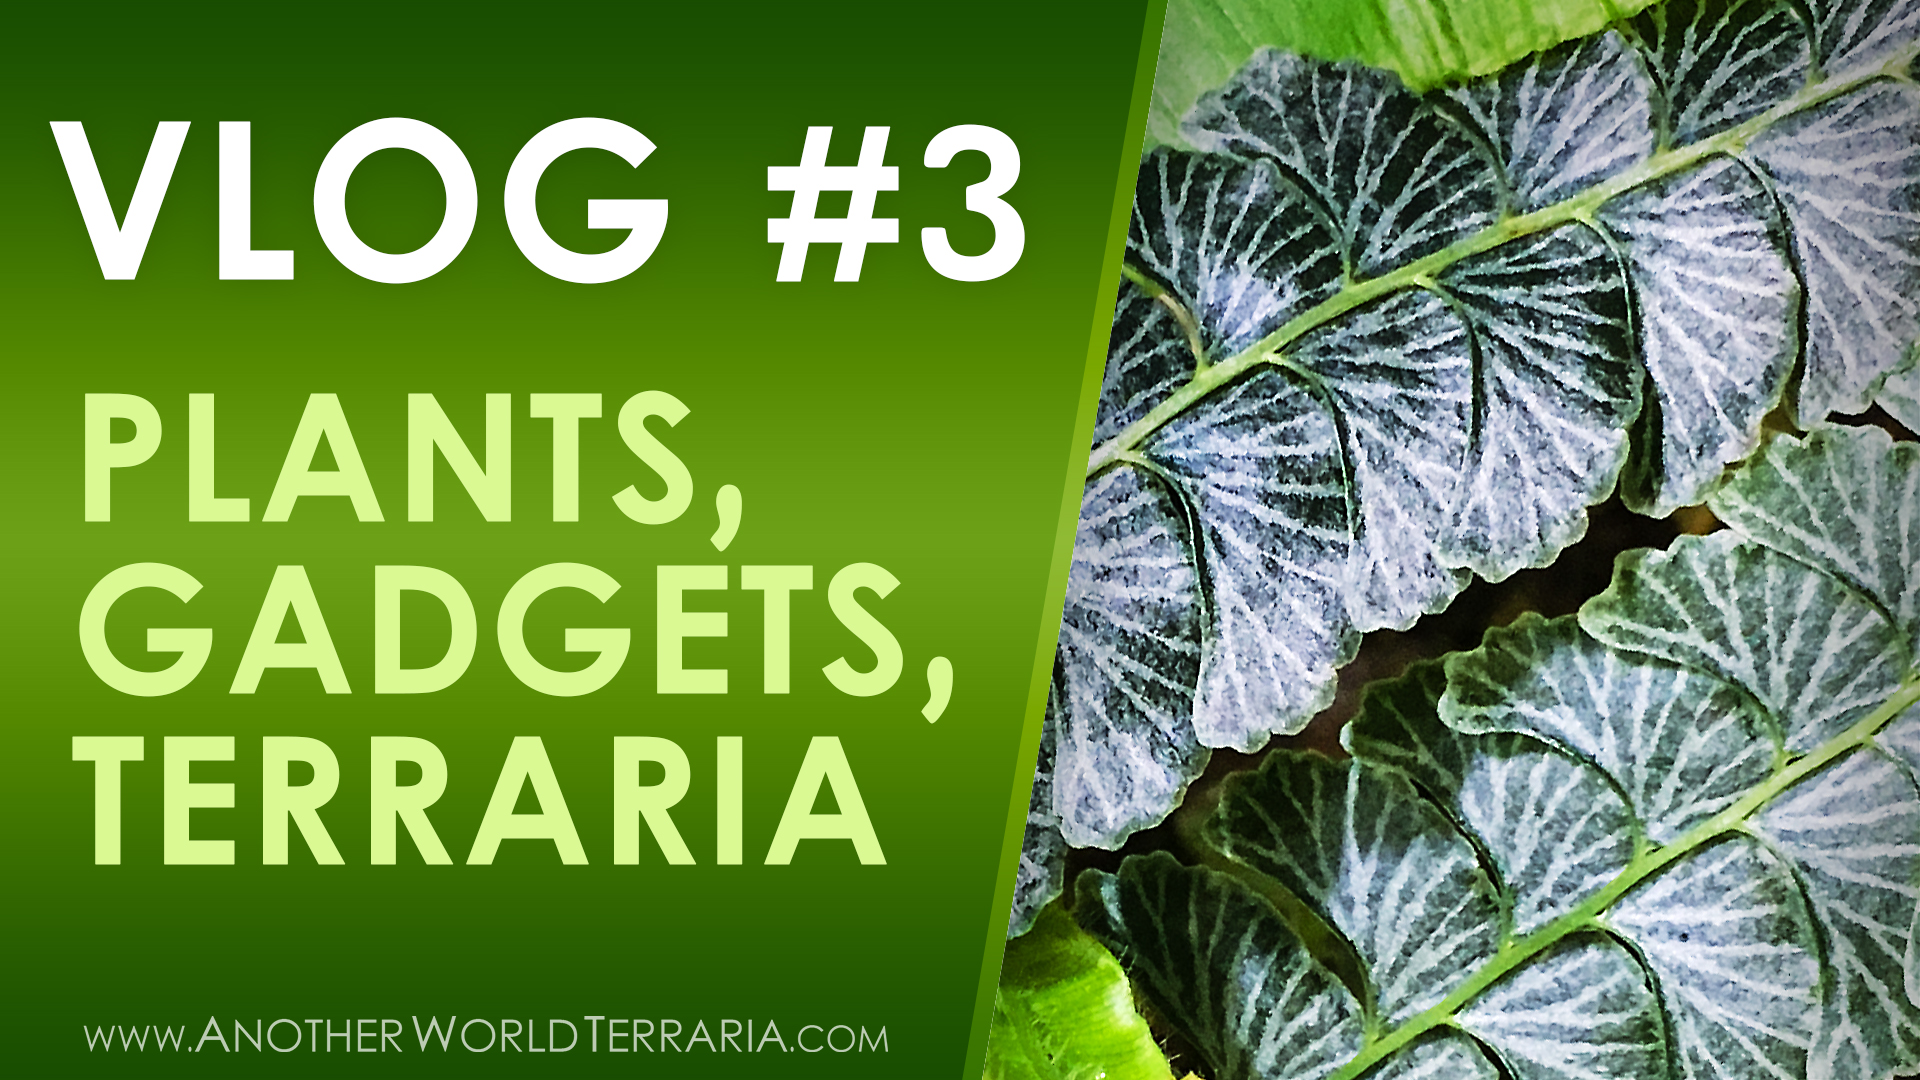 Vlog #3 – Plants, Gadgets, Brancharium (and more!)